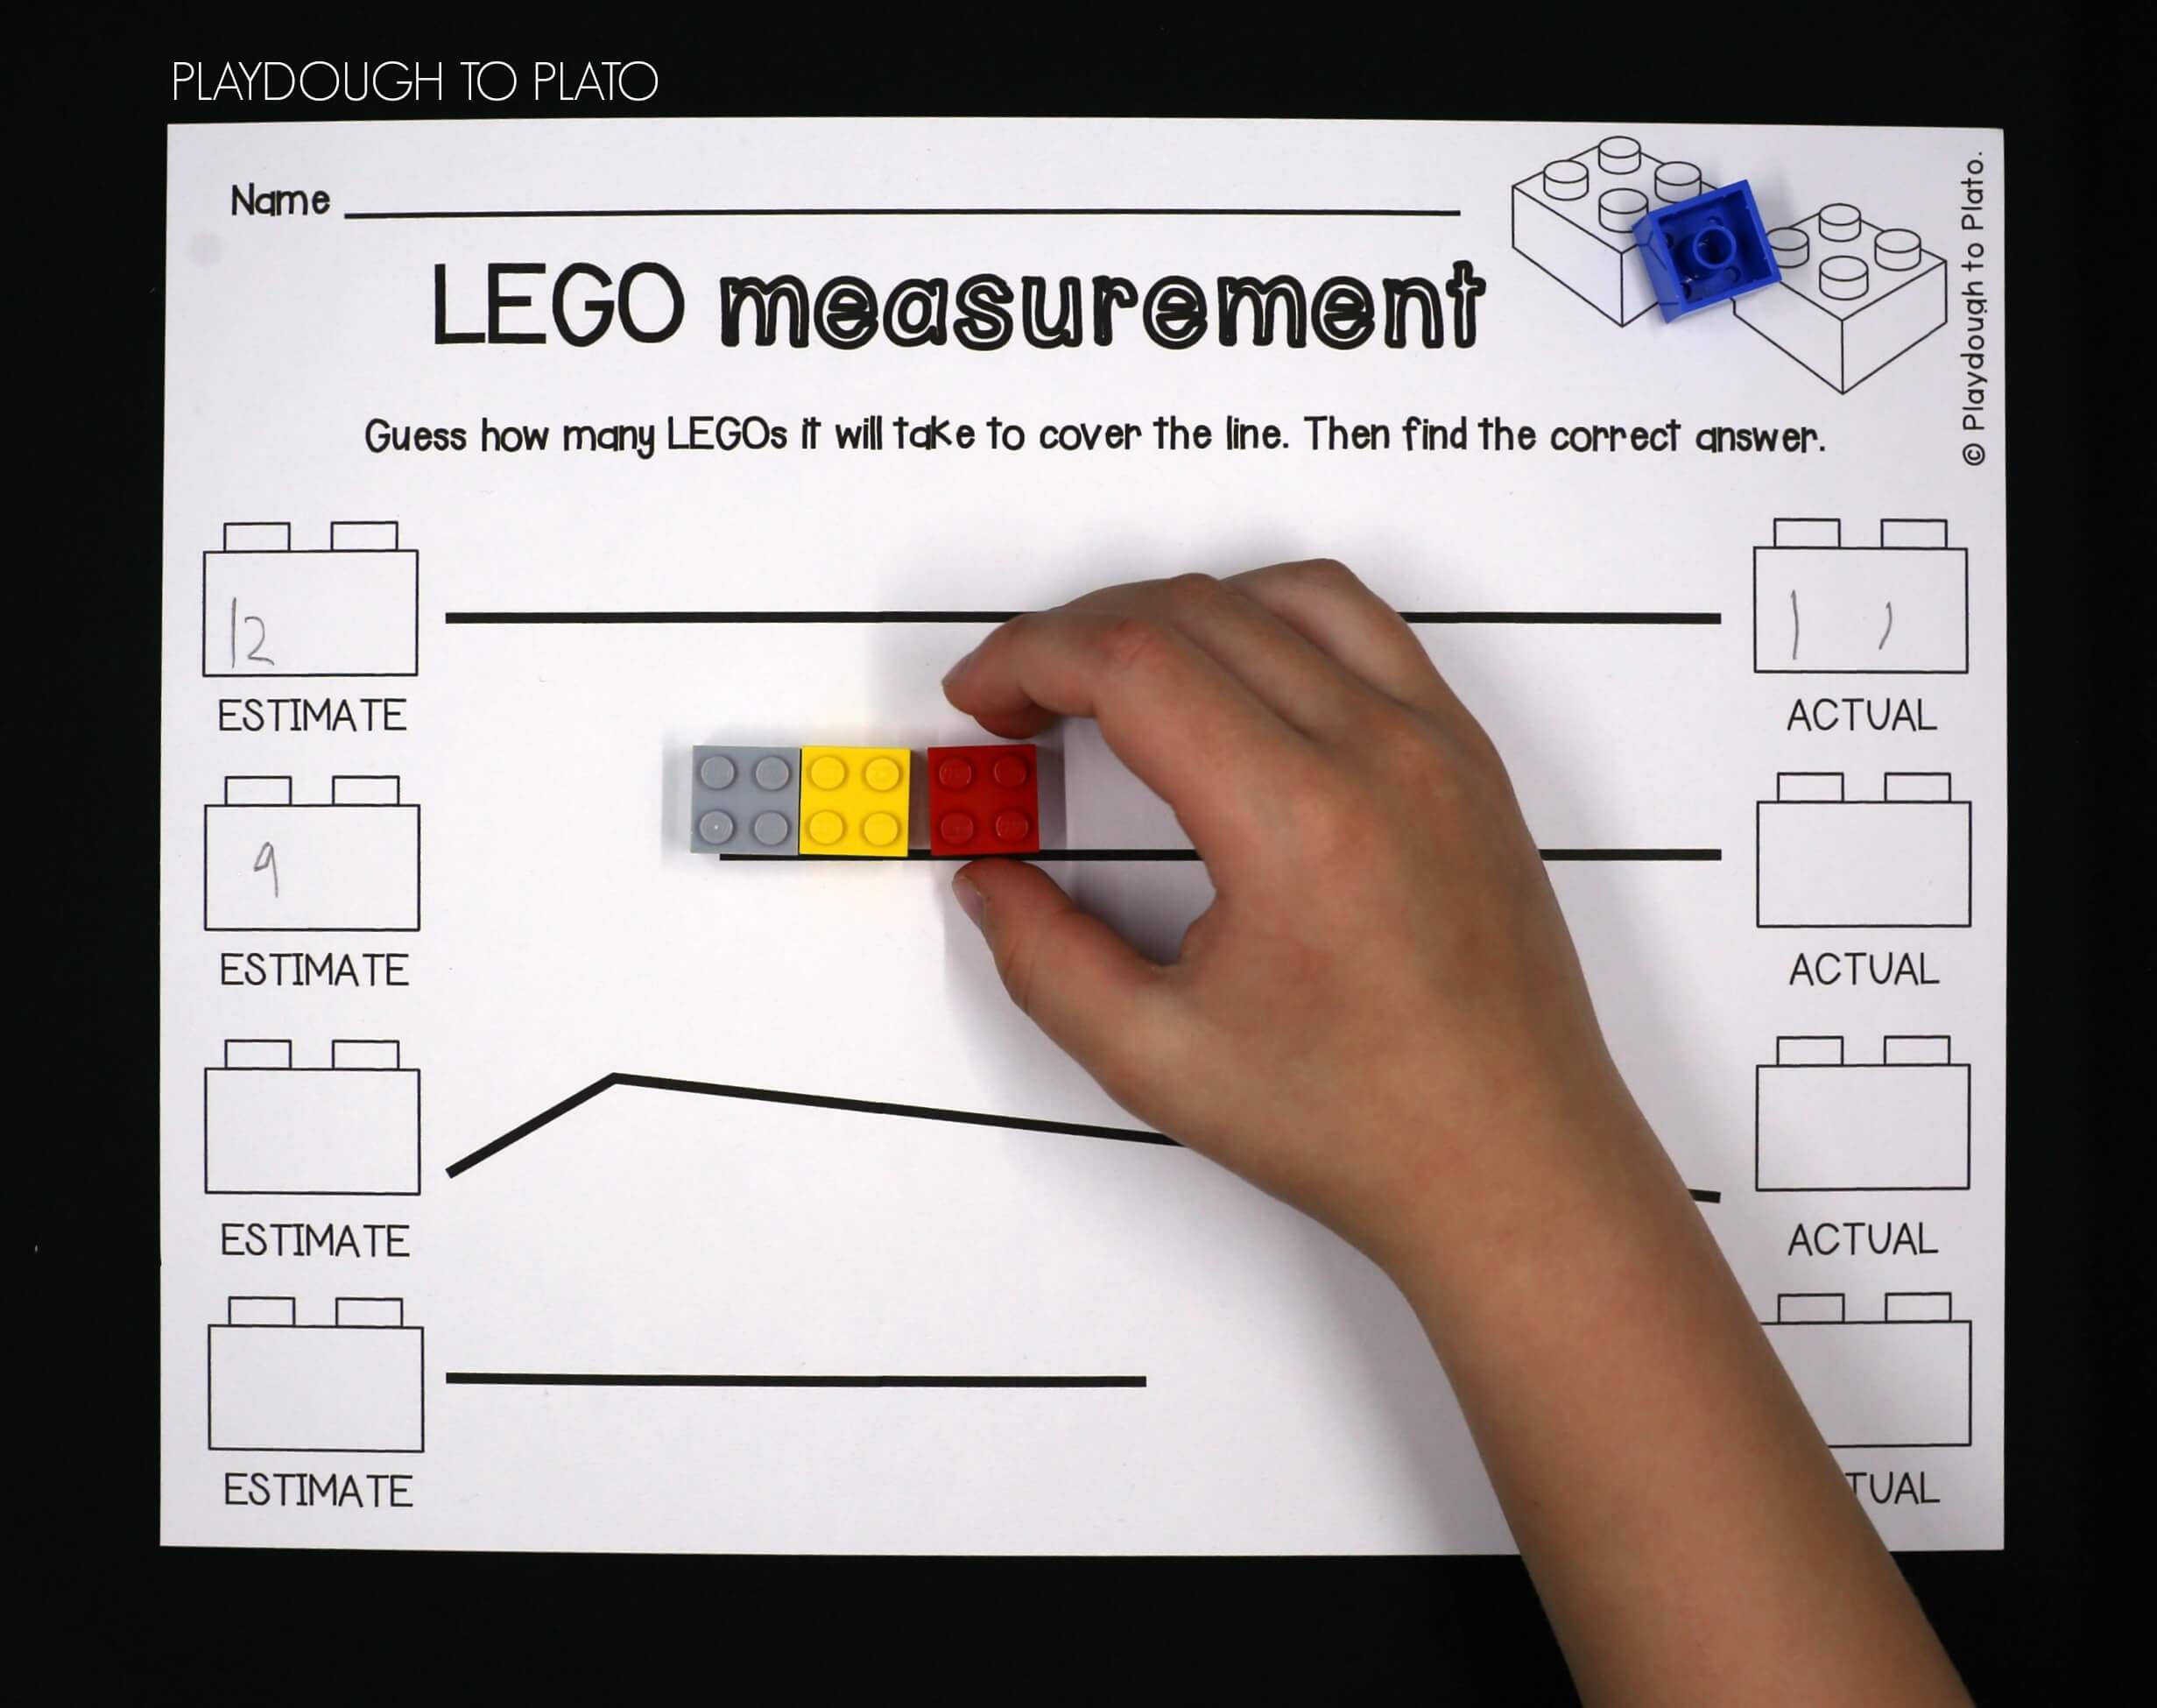 LEGO Measurement - Playdough To Plato